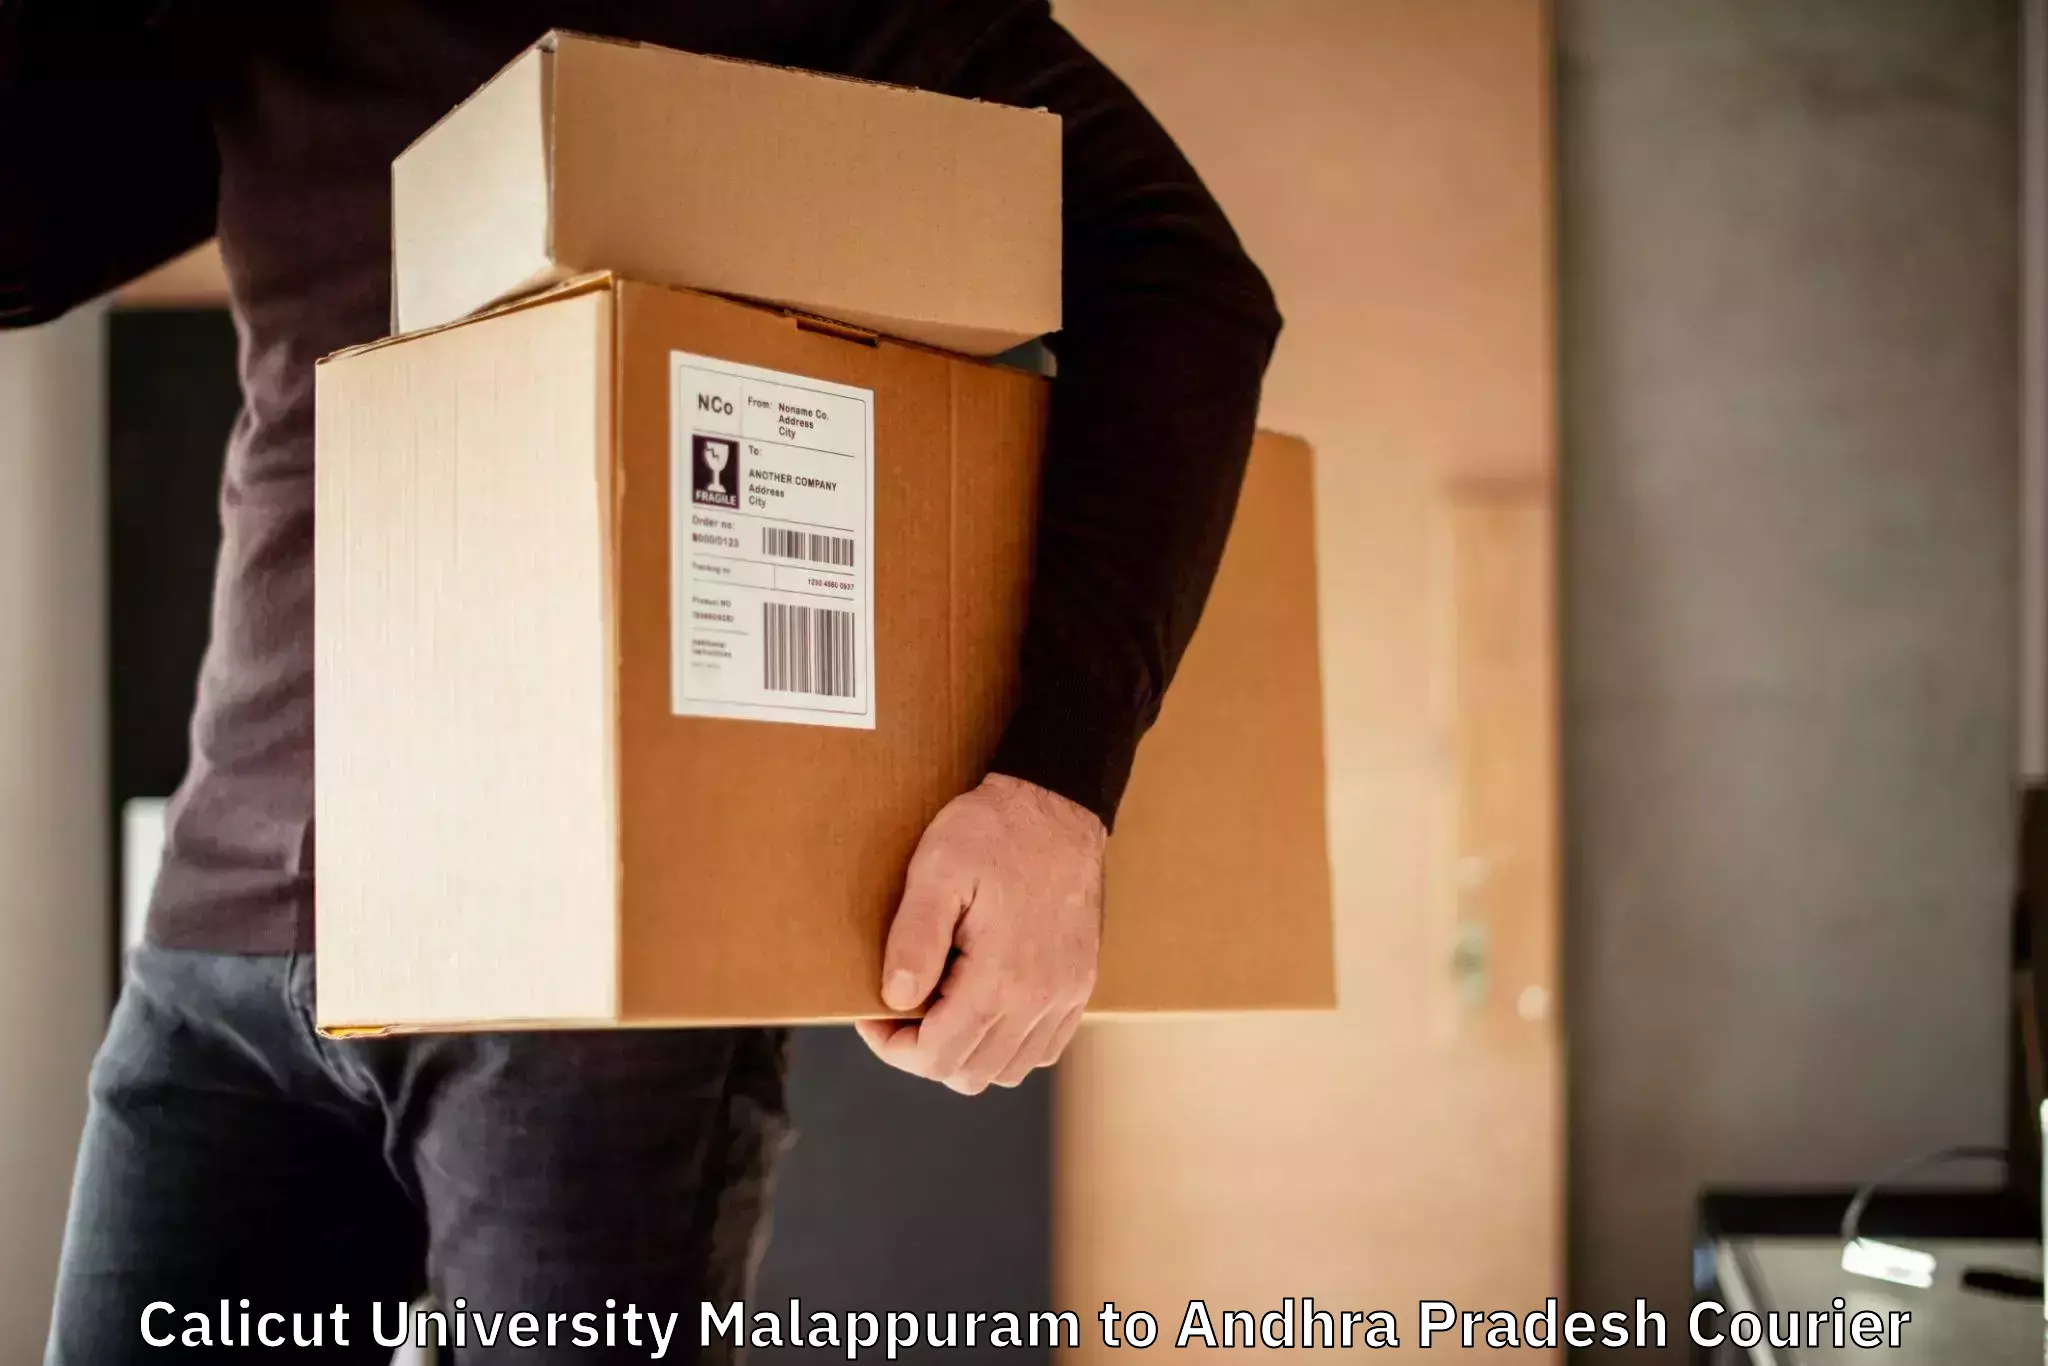 Global courier networks Calicut University Malappuram to Kathipudi